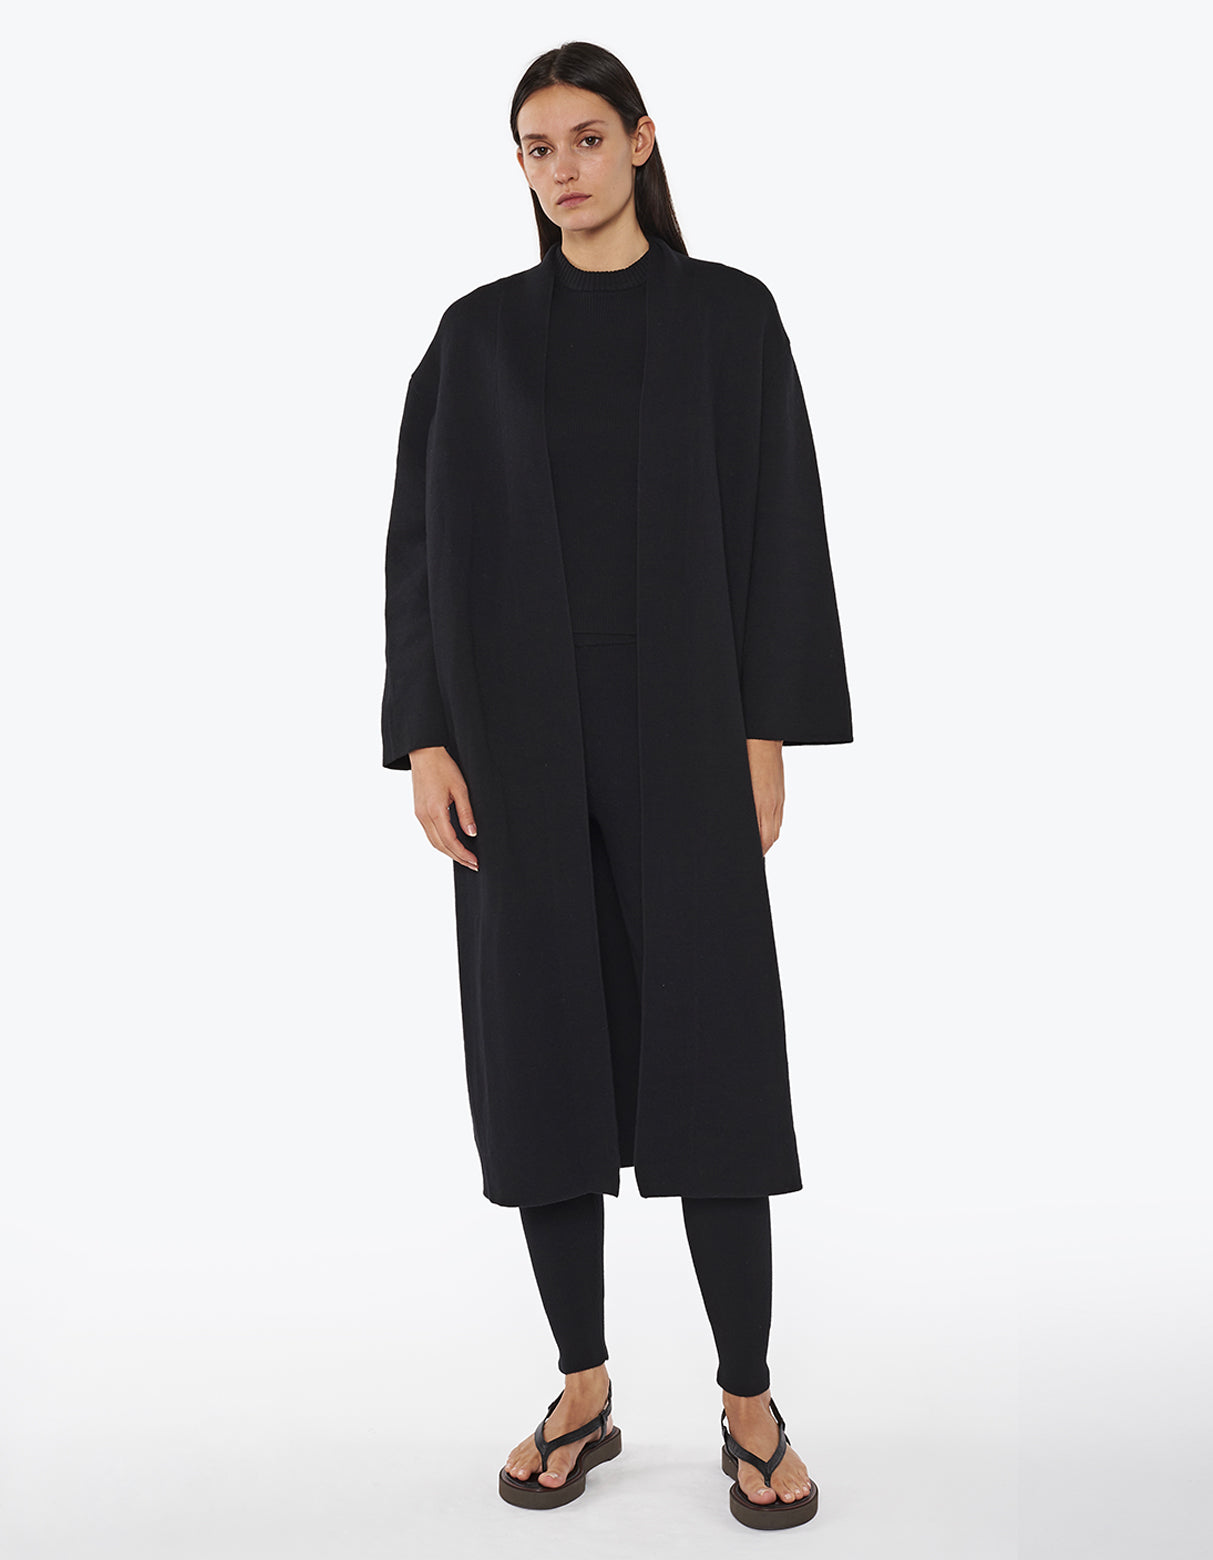 Rib Knit Tank Wool Blend Black Luxury Flattering Women's Designer Top sleeveless crew neck shirt